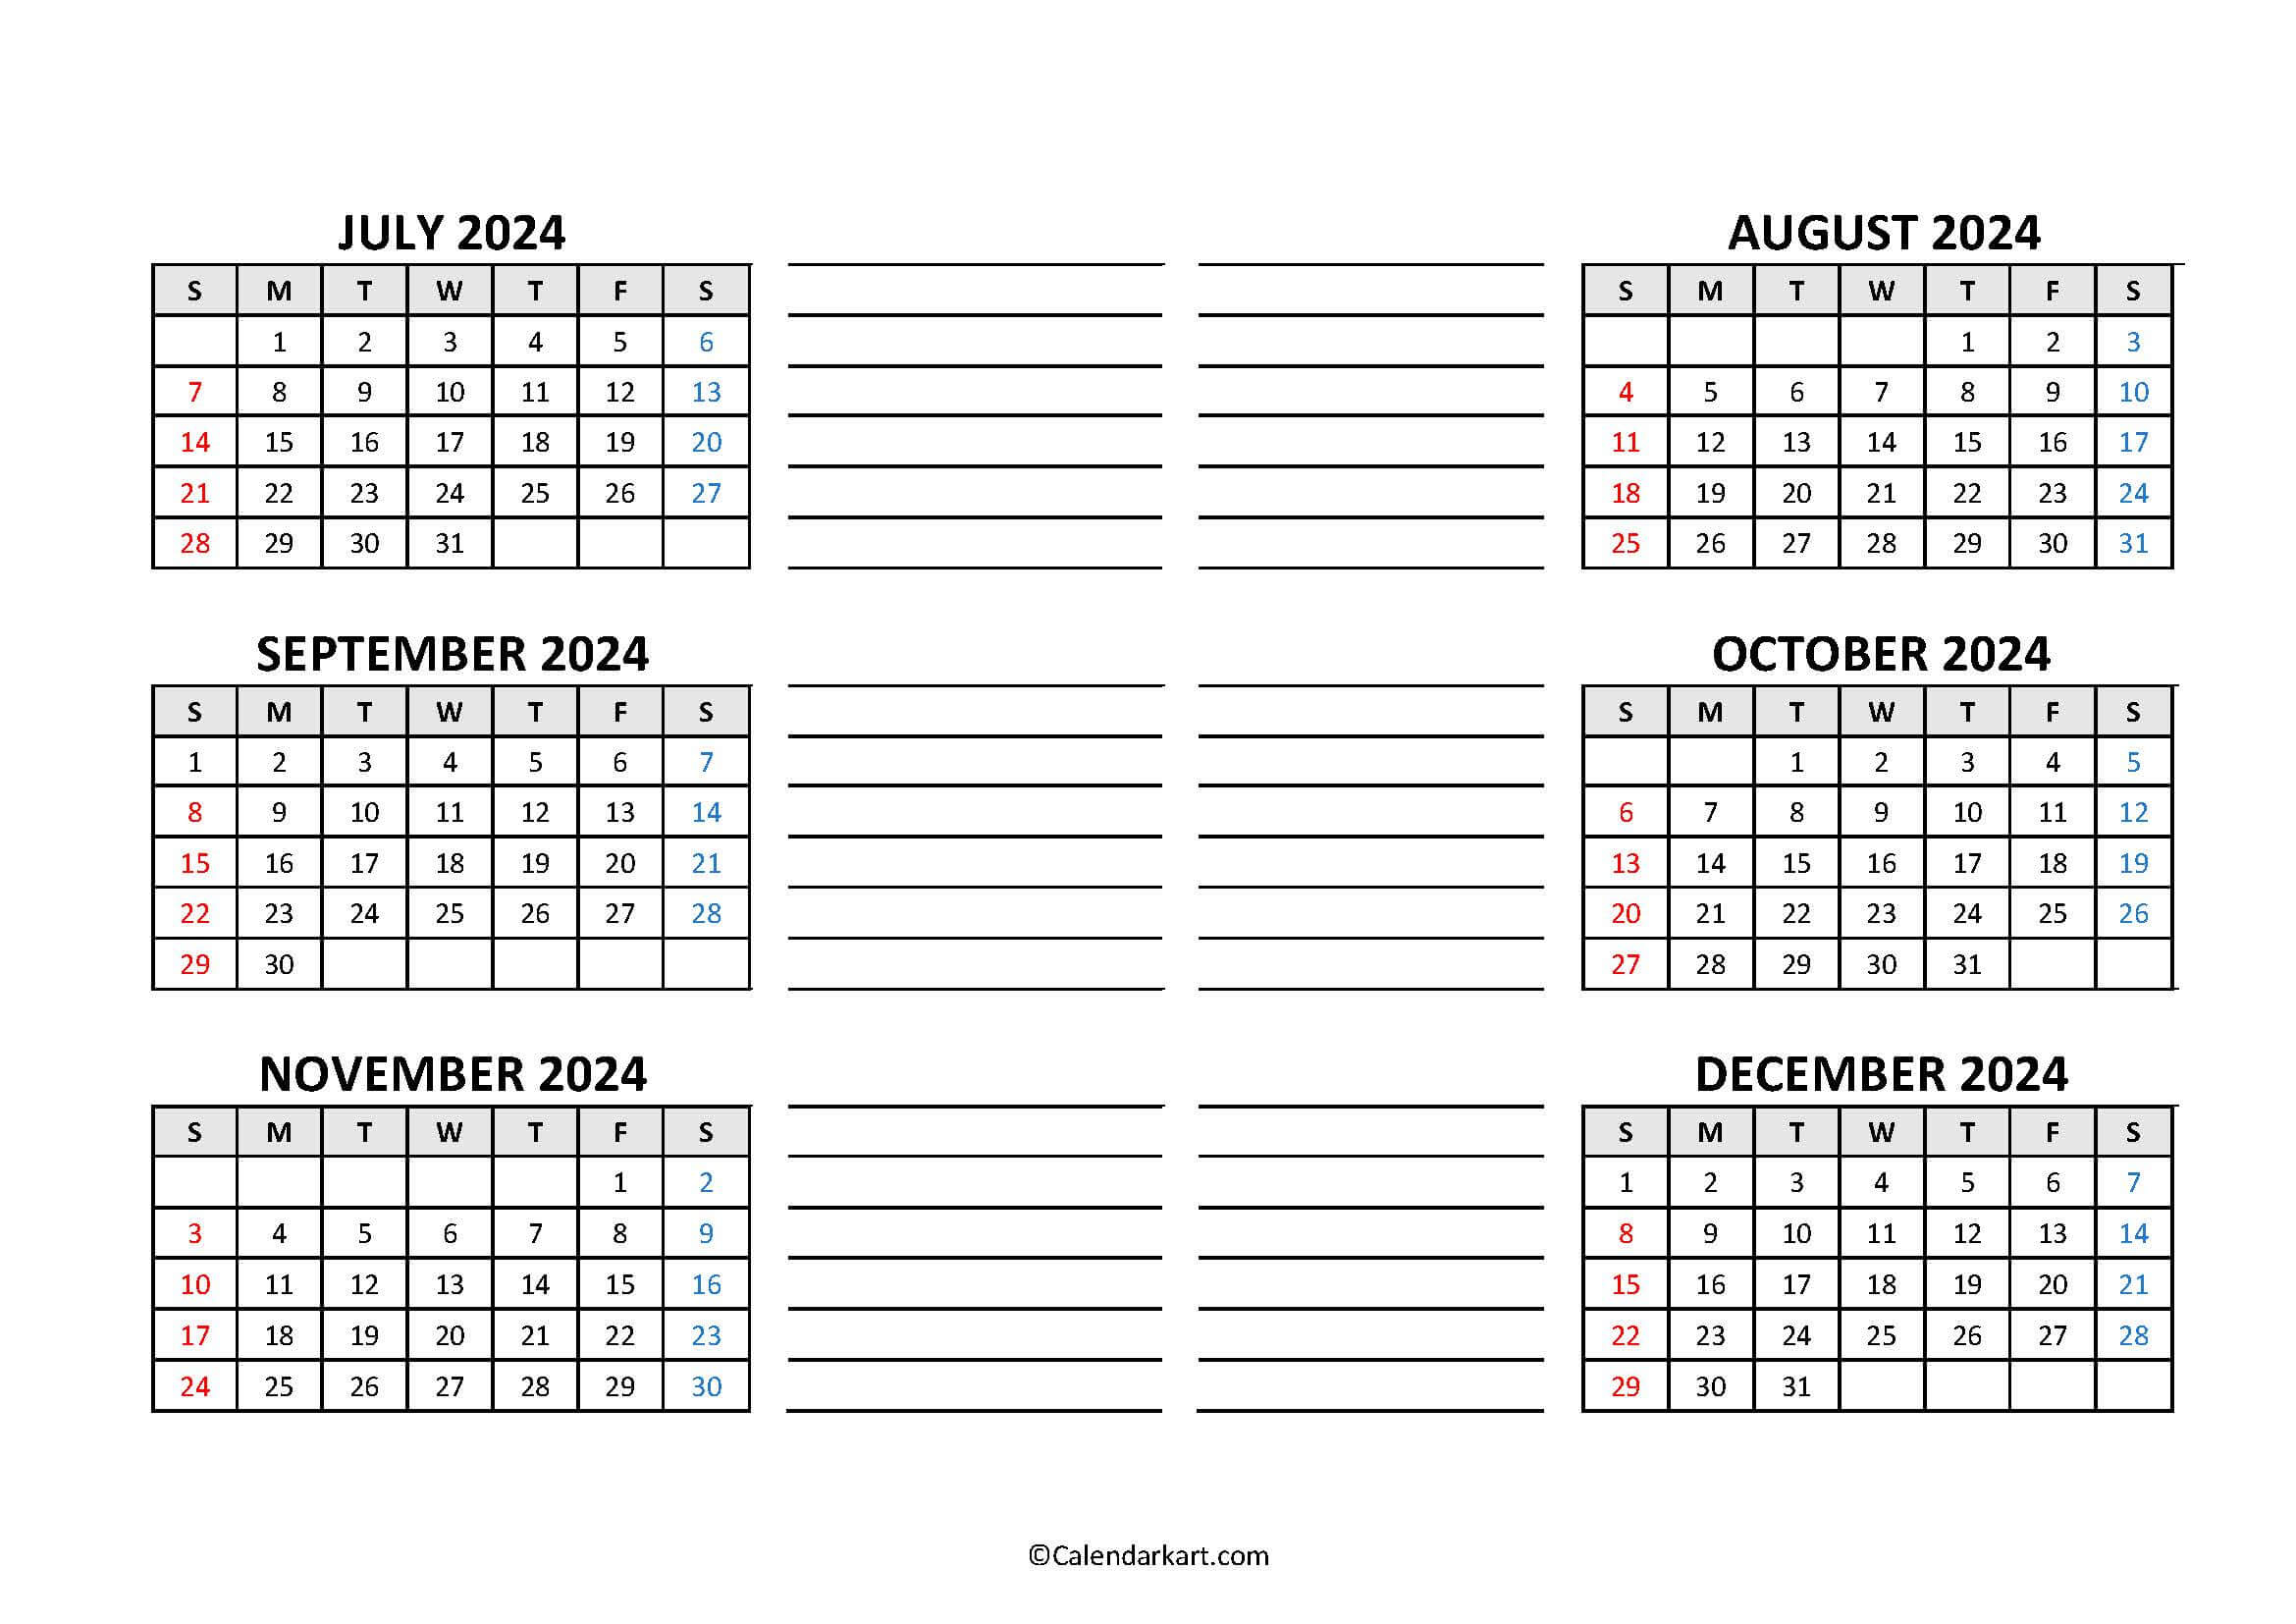 Free Printable Year At A Glance Calendar 2024 - Calendarkart | Calendar July - December 2024